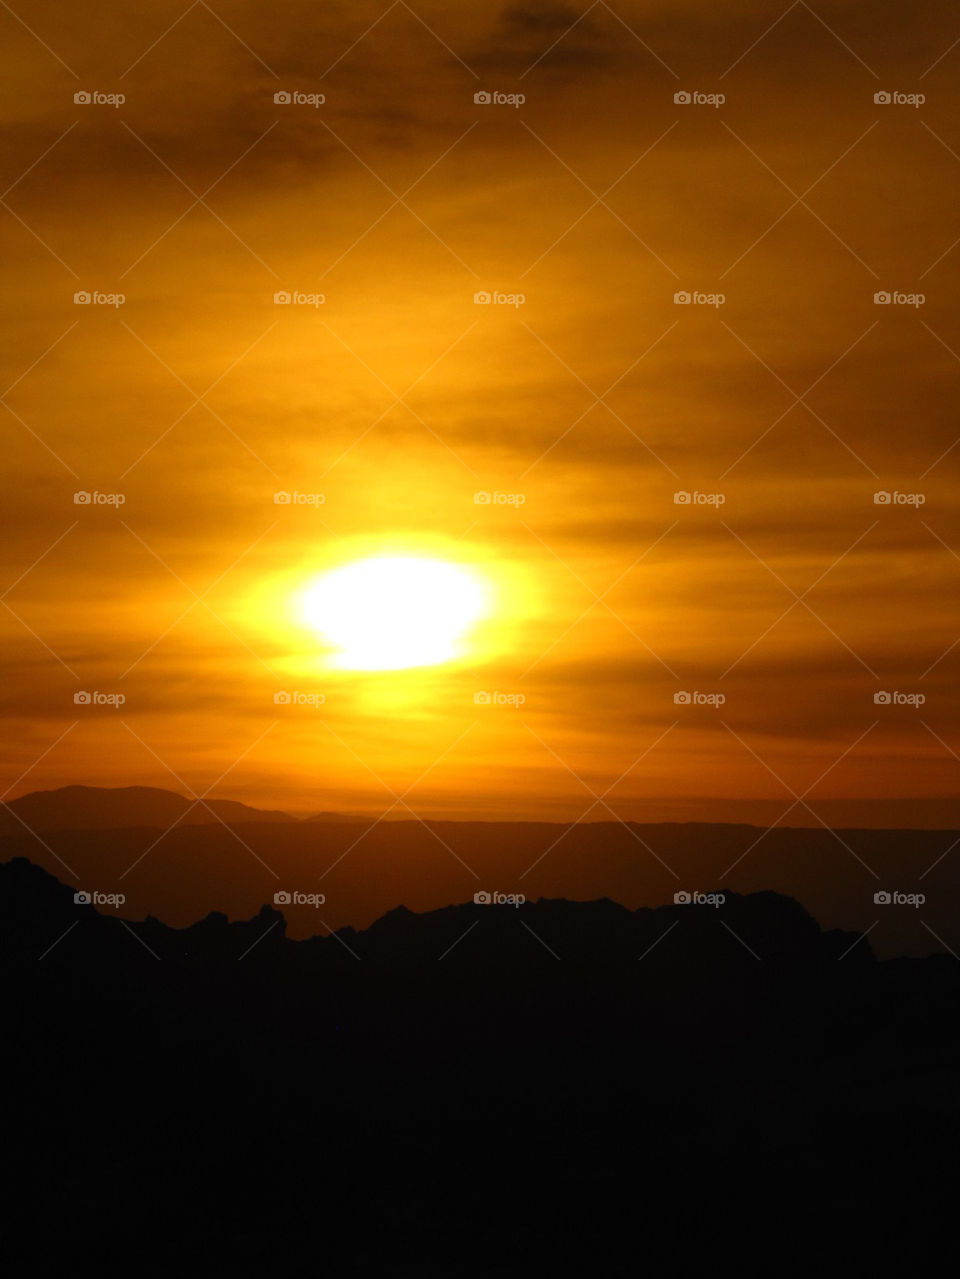 Landscape sunset